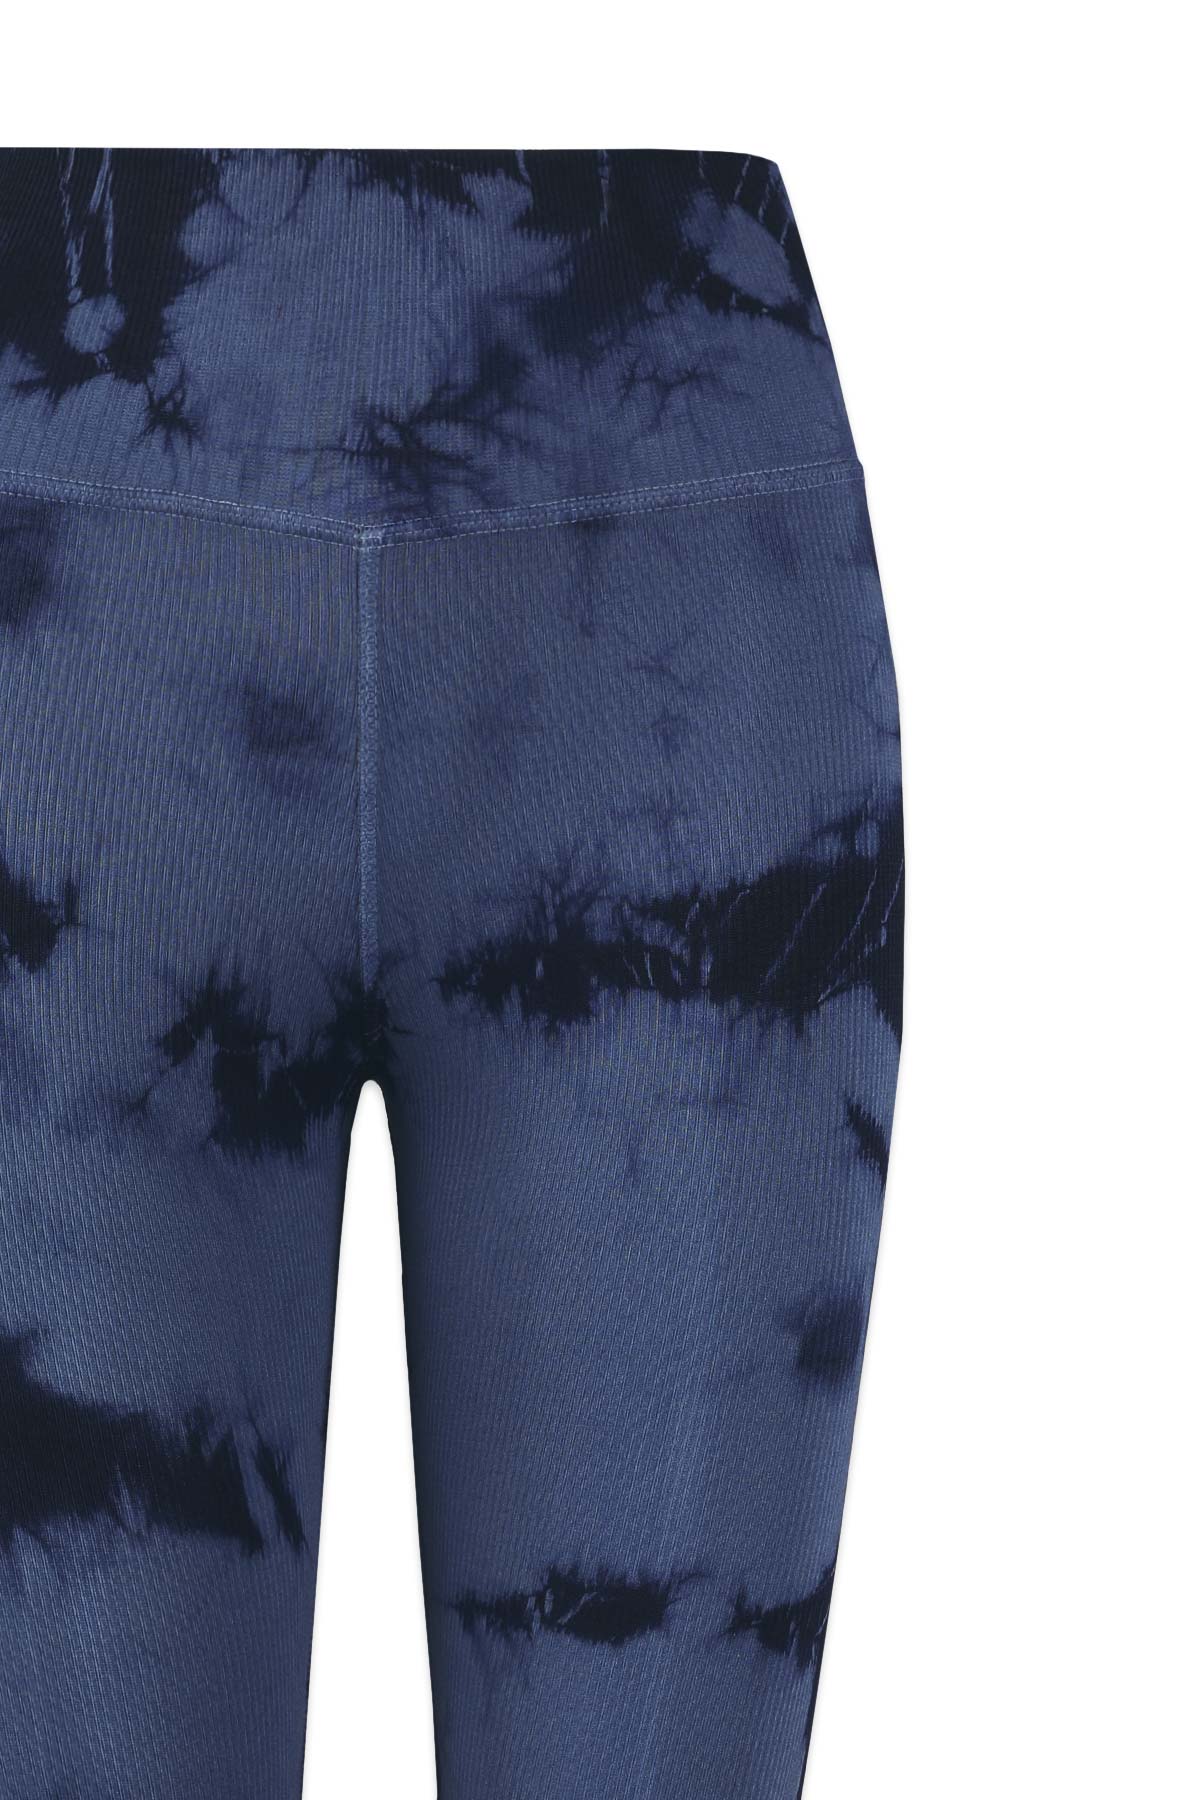 Gymshark Sweat Seamless Washed Leggings - Capri Blue